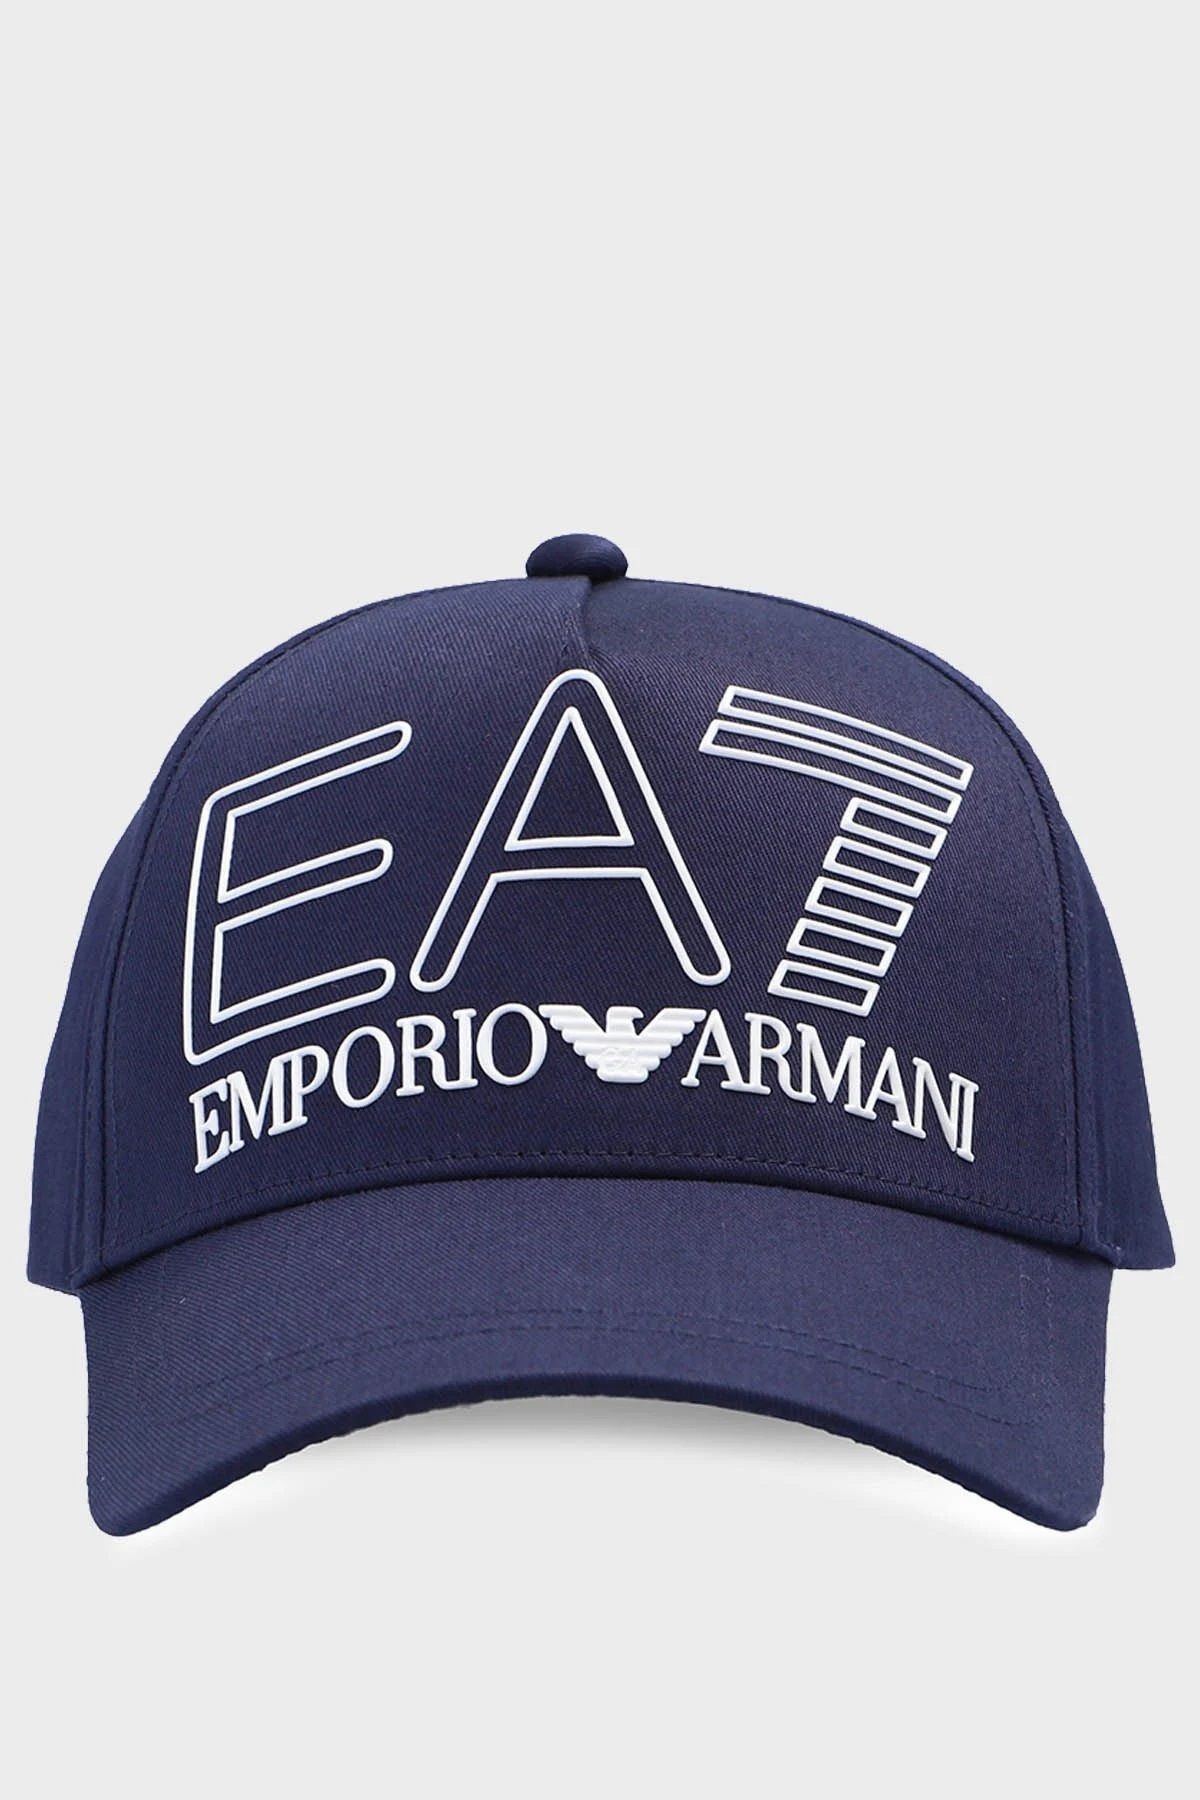 Emporio Armani Erkek Şapka 274991-2r102-00035